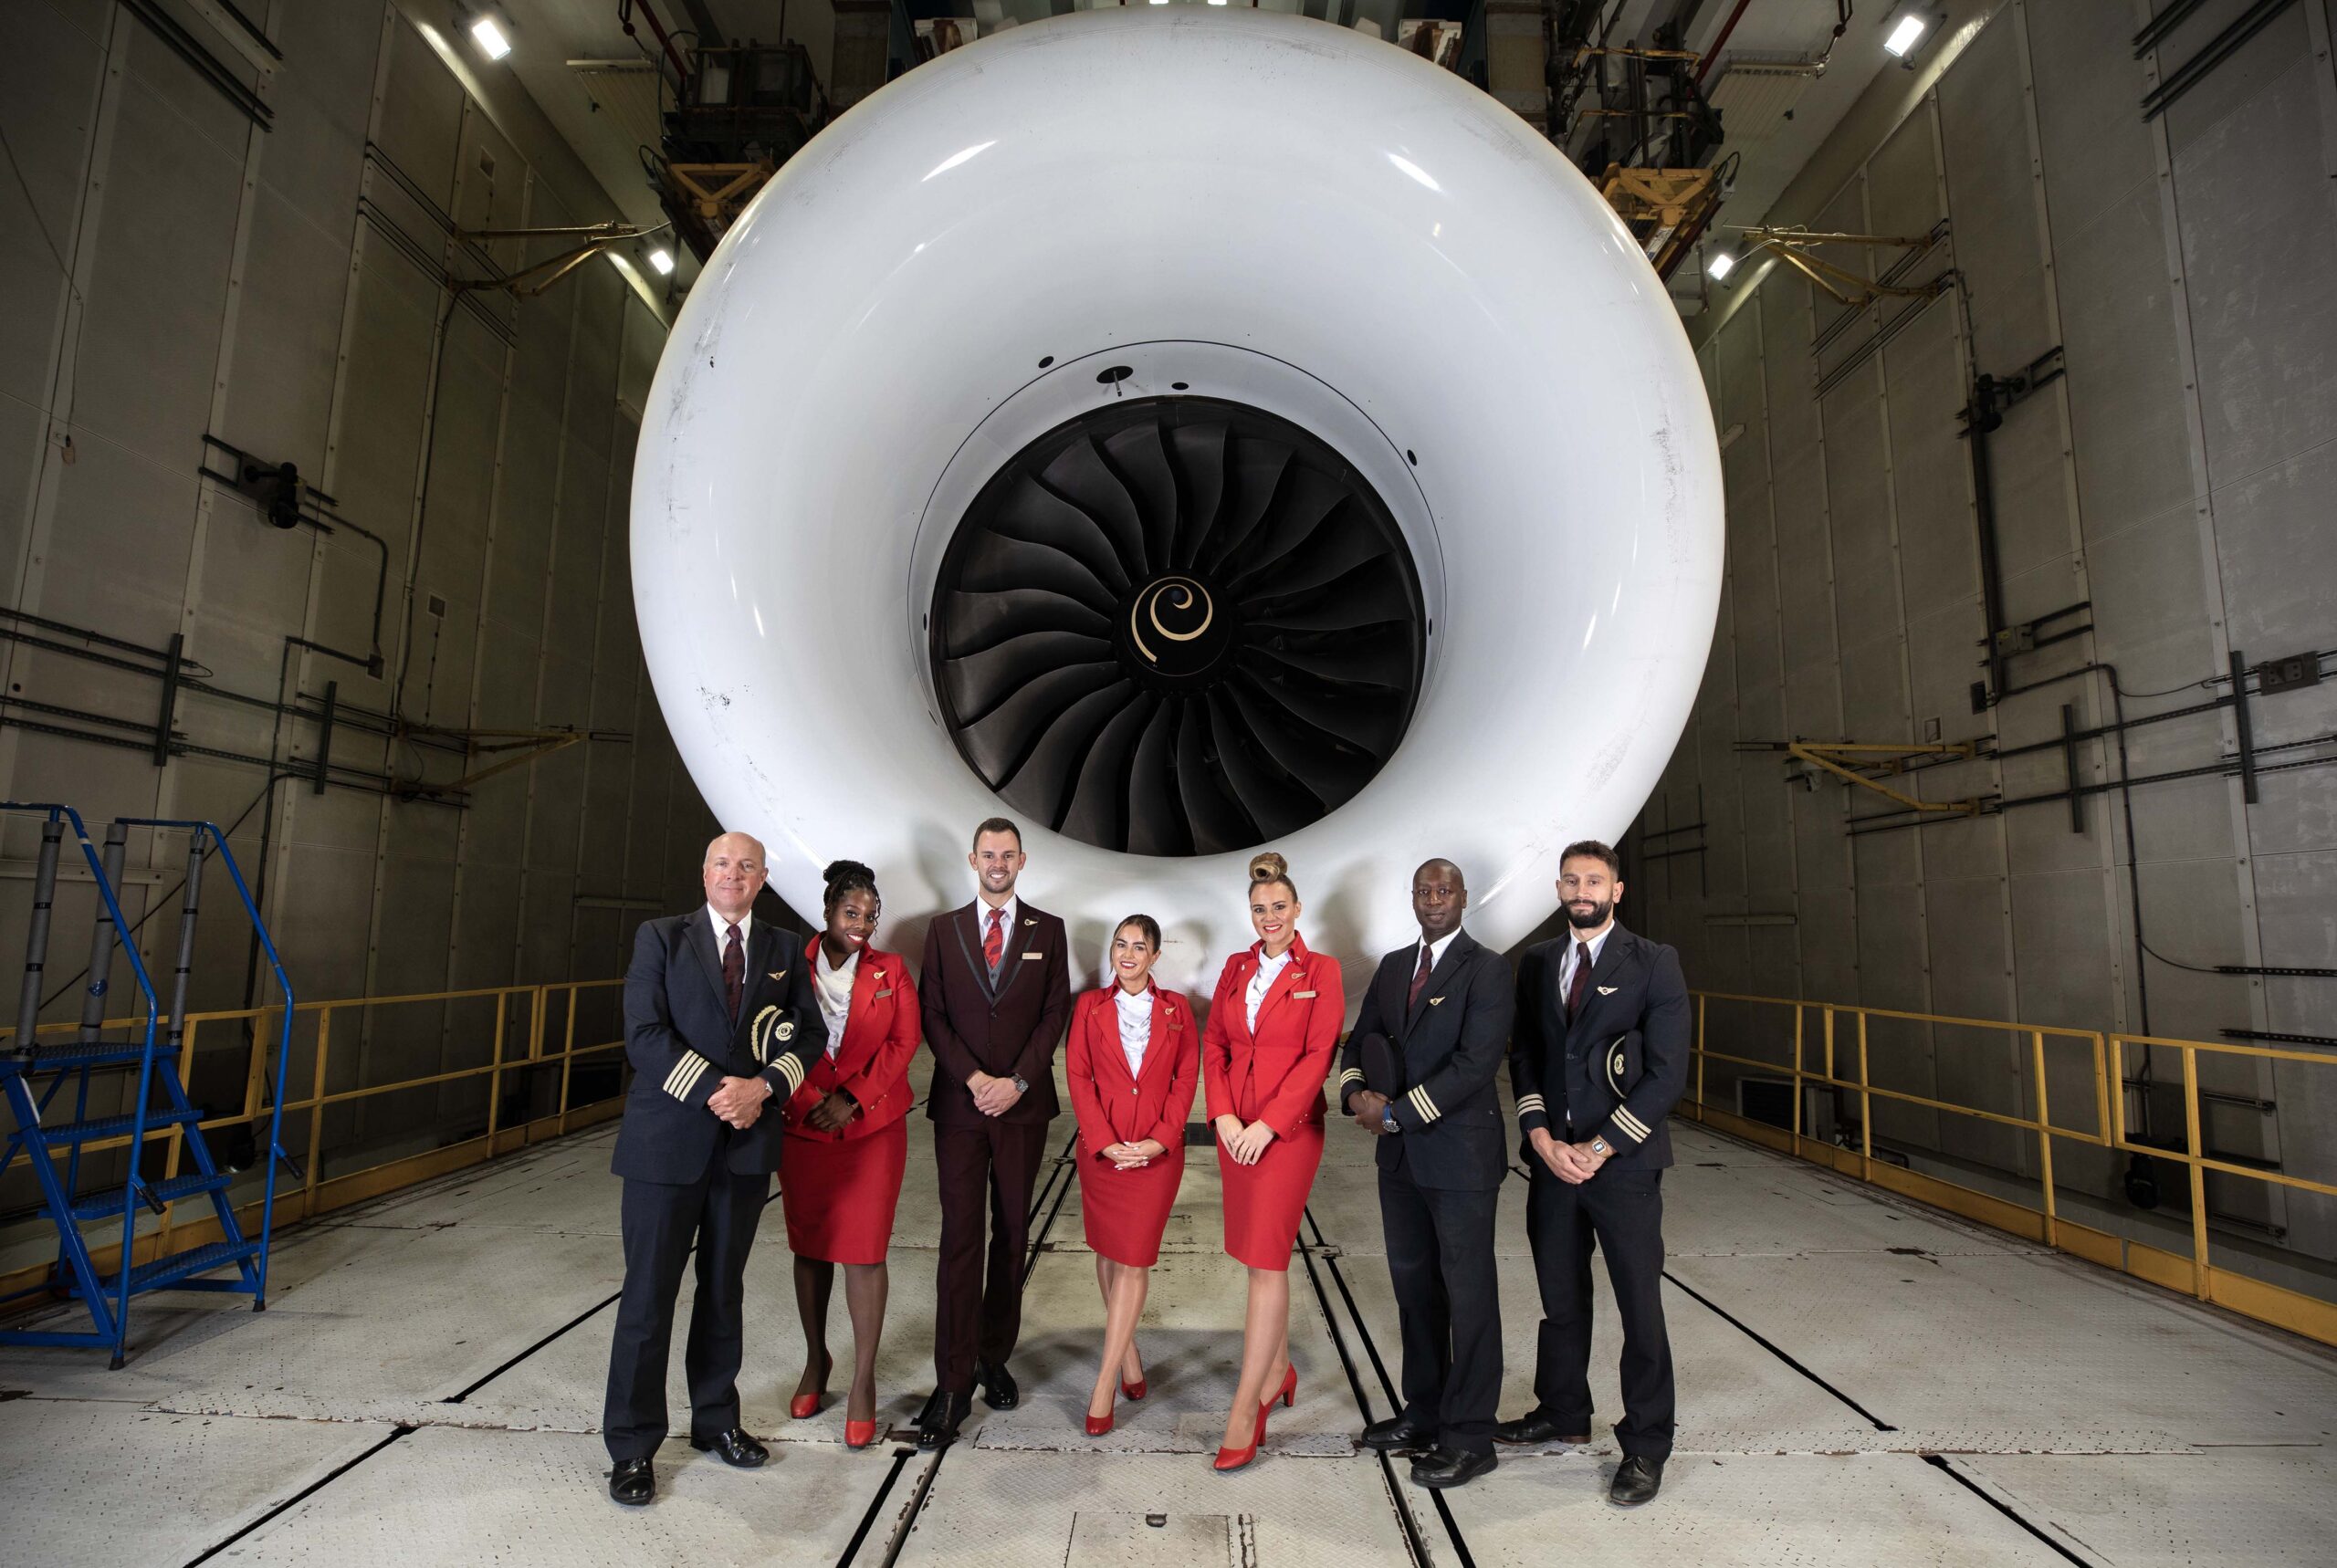 Virgin Atlantic to Operate First Transatlantic Flight with Sustainable Aviation Fuel